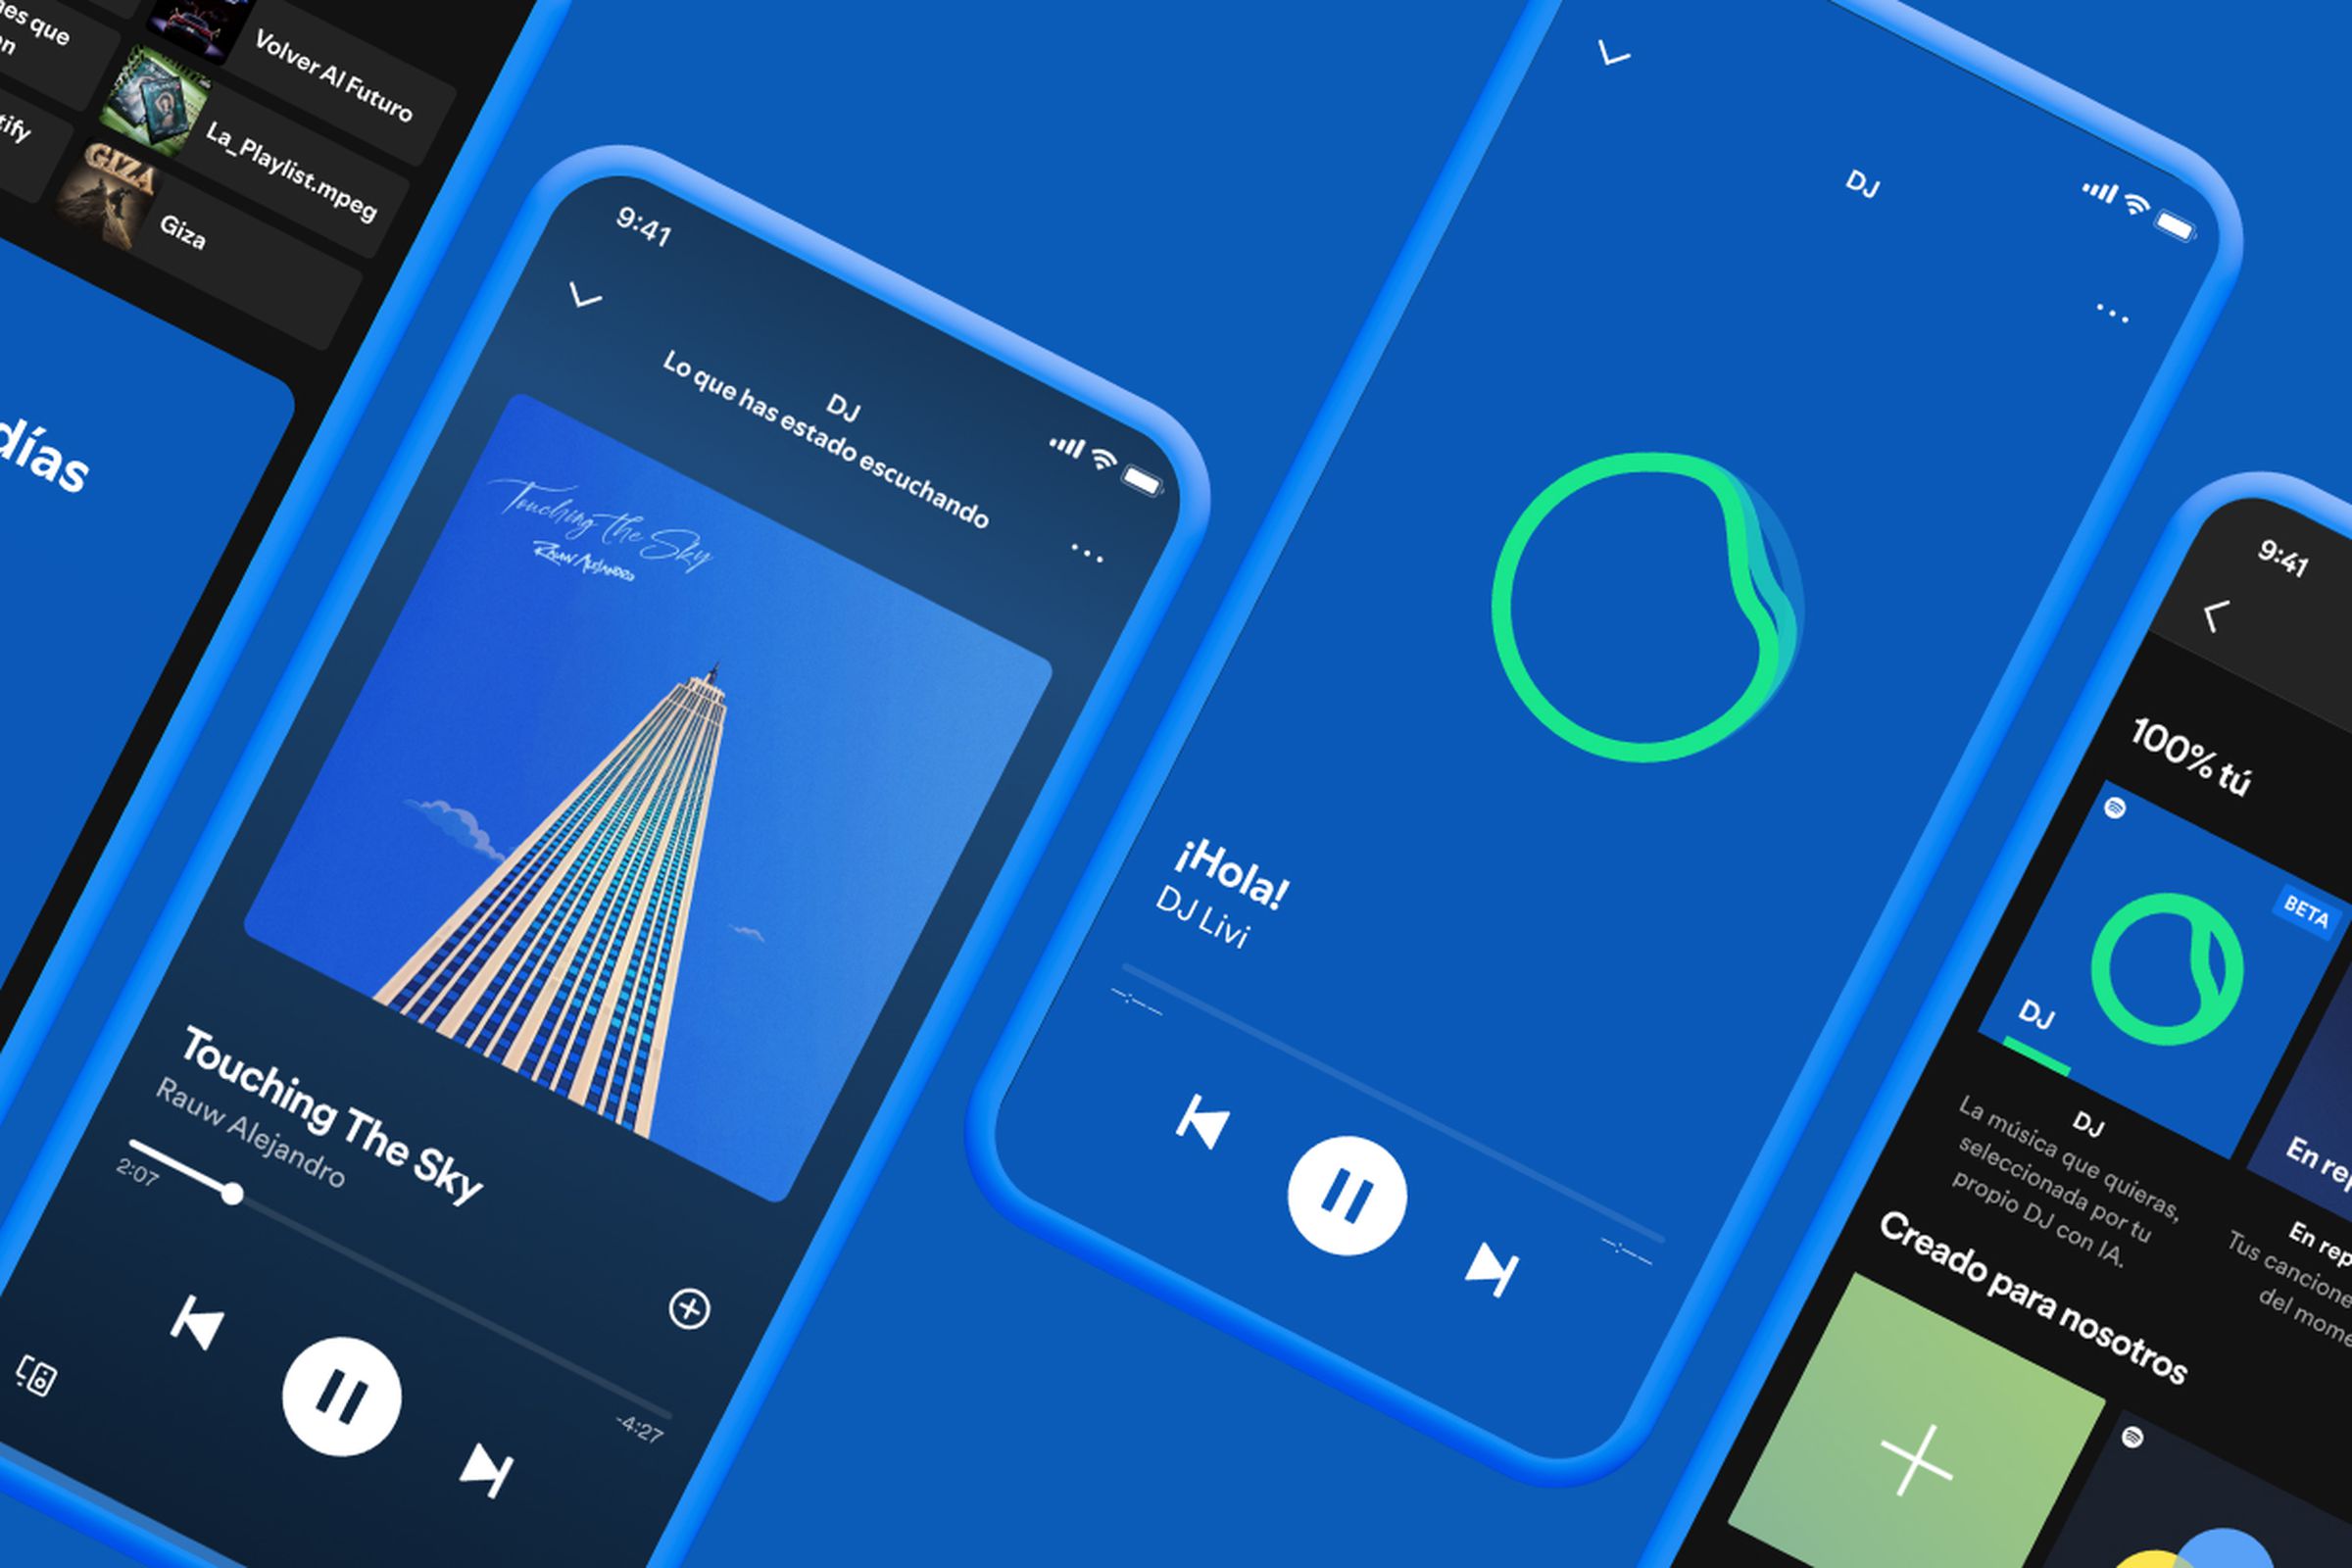 Graphic art depicting phones using Spotify’s Spanish-speaking AI DJ feature.